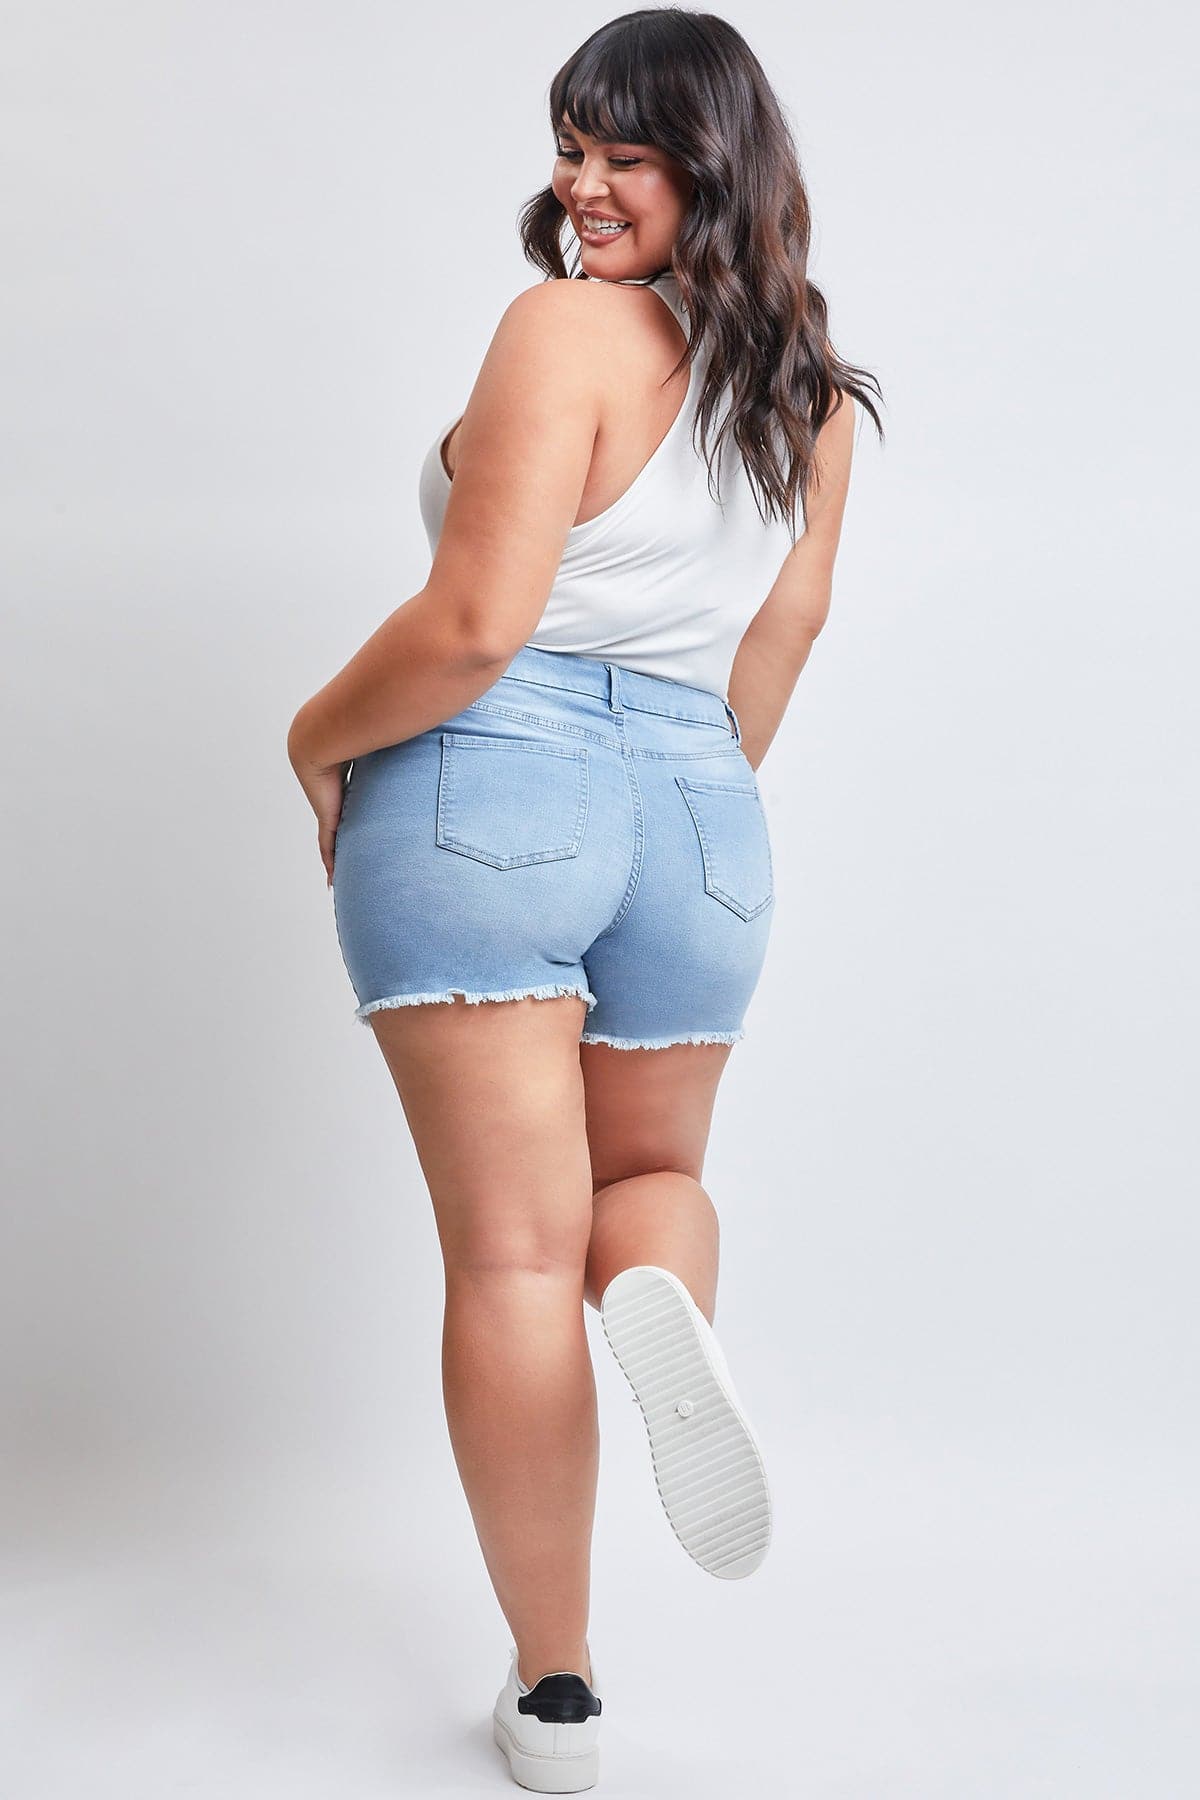 Plus Size Women's Curvy Fit  Jeans Shorts With Fray Hem-Sale